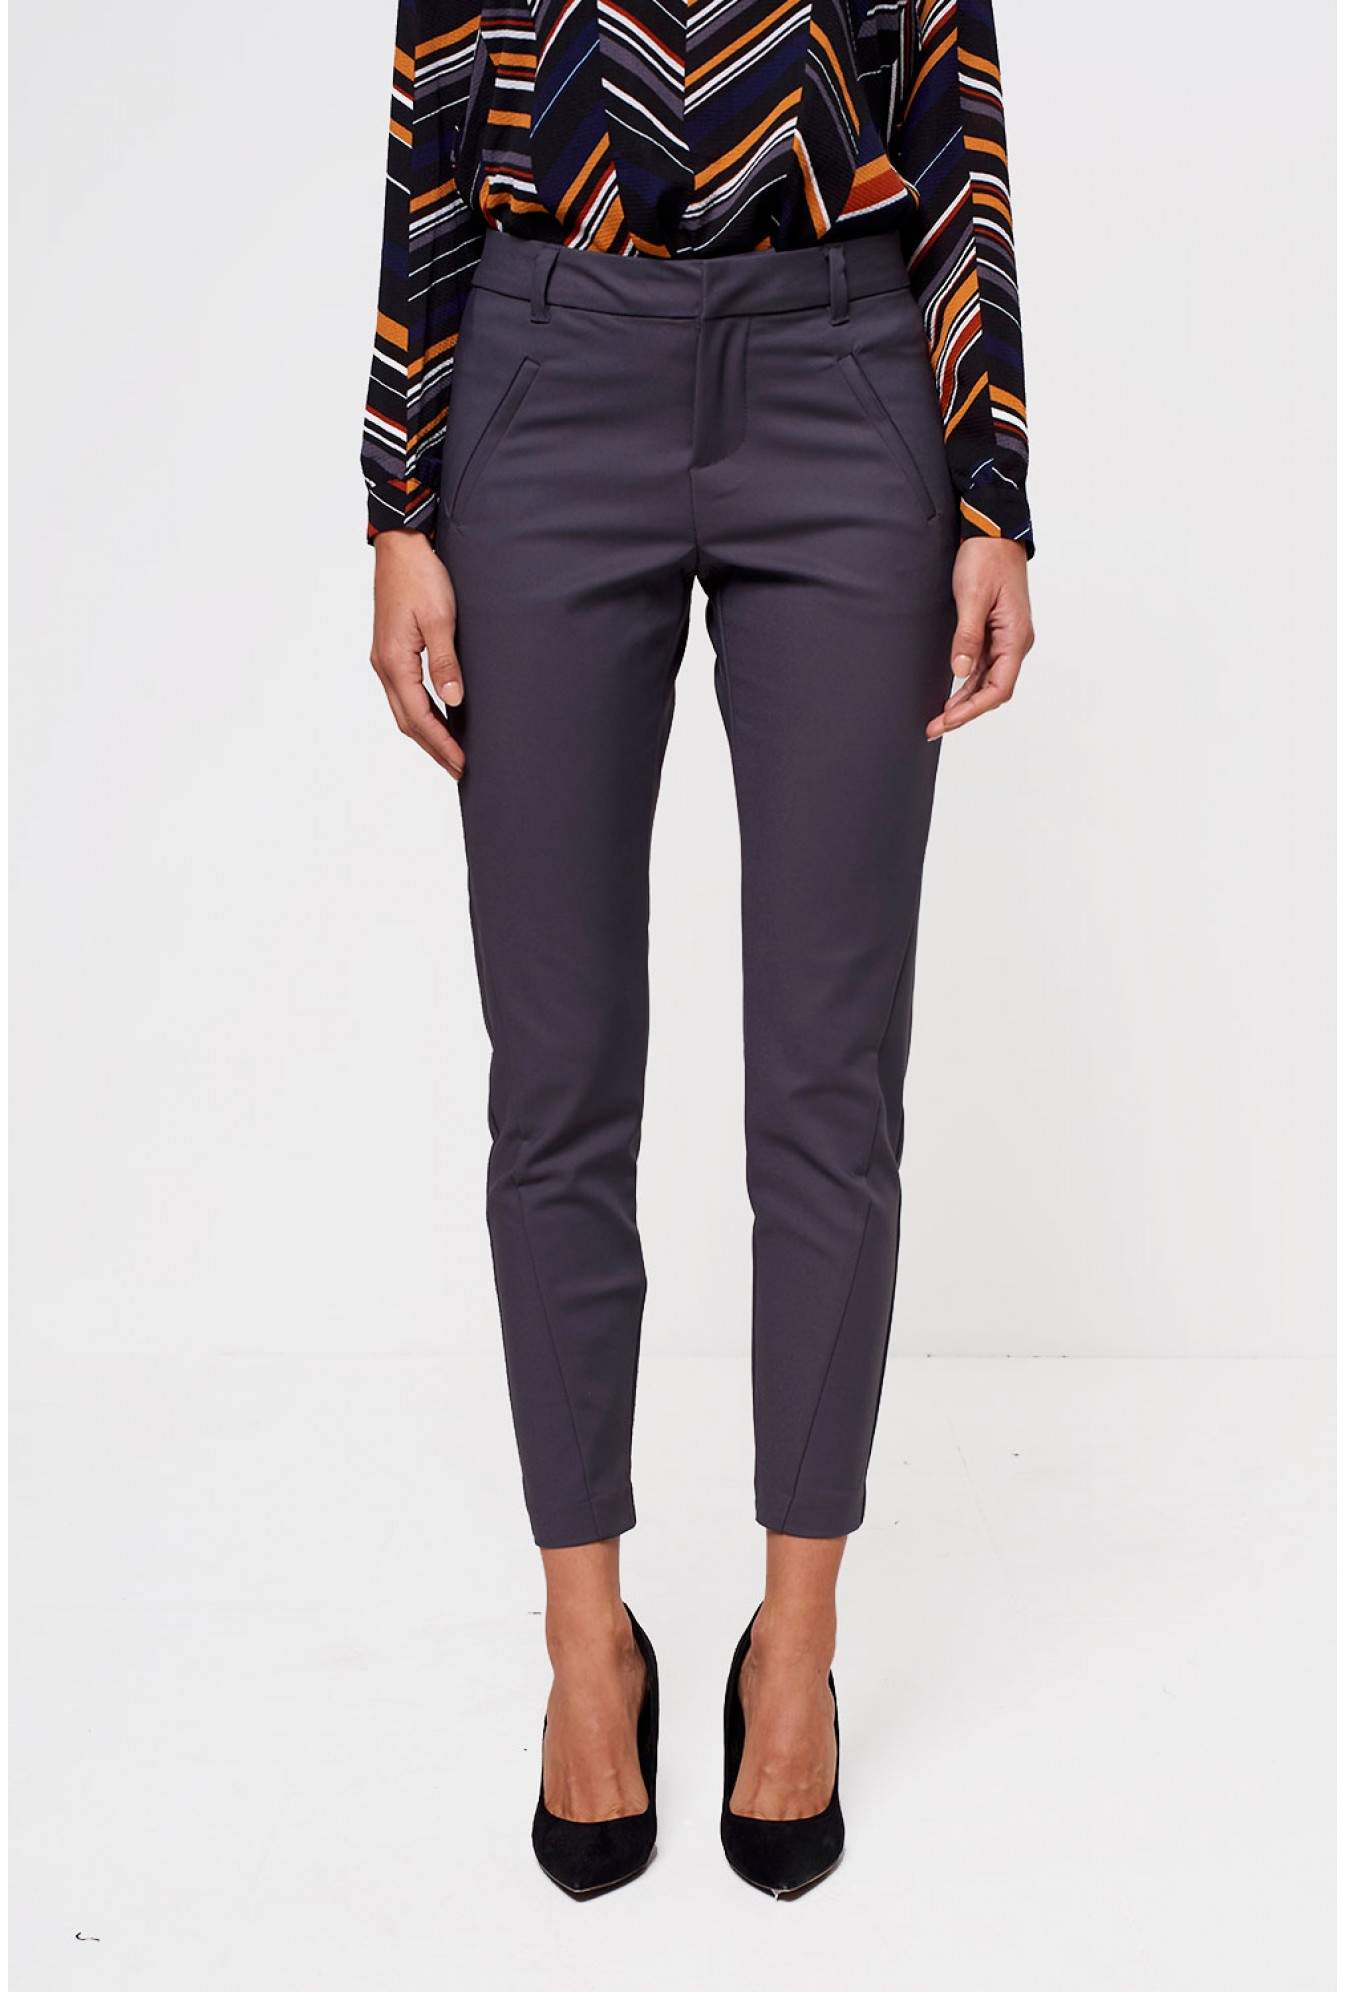 Vero Moda Victoria Long Length Ankle Pants in Dark Grey | iCLOTHING